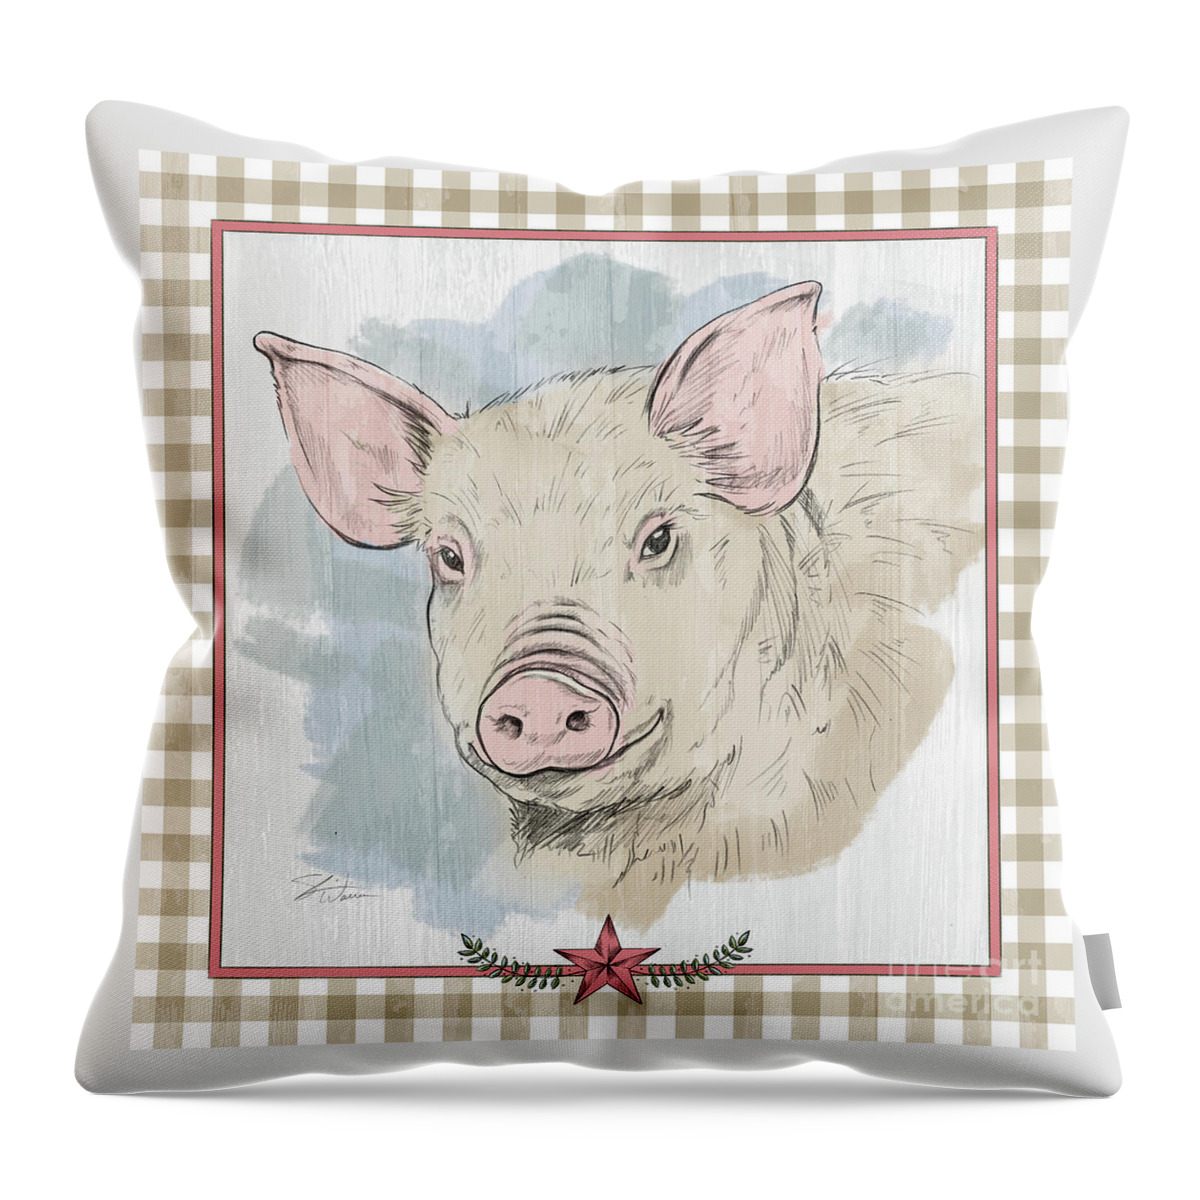 Pig Throw Pillow featuring the mixed media Pig Portrait-Farm Animals by Shari Warren